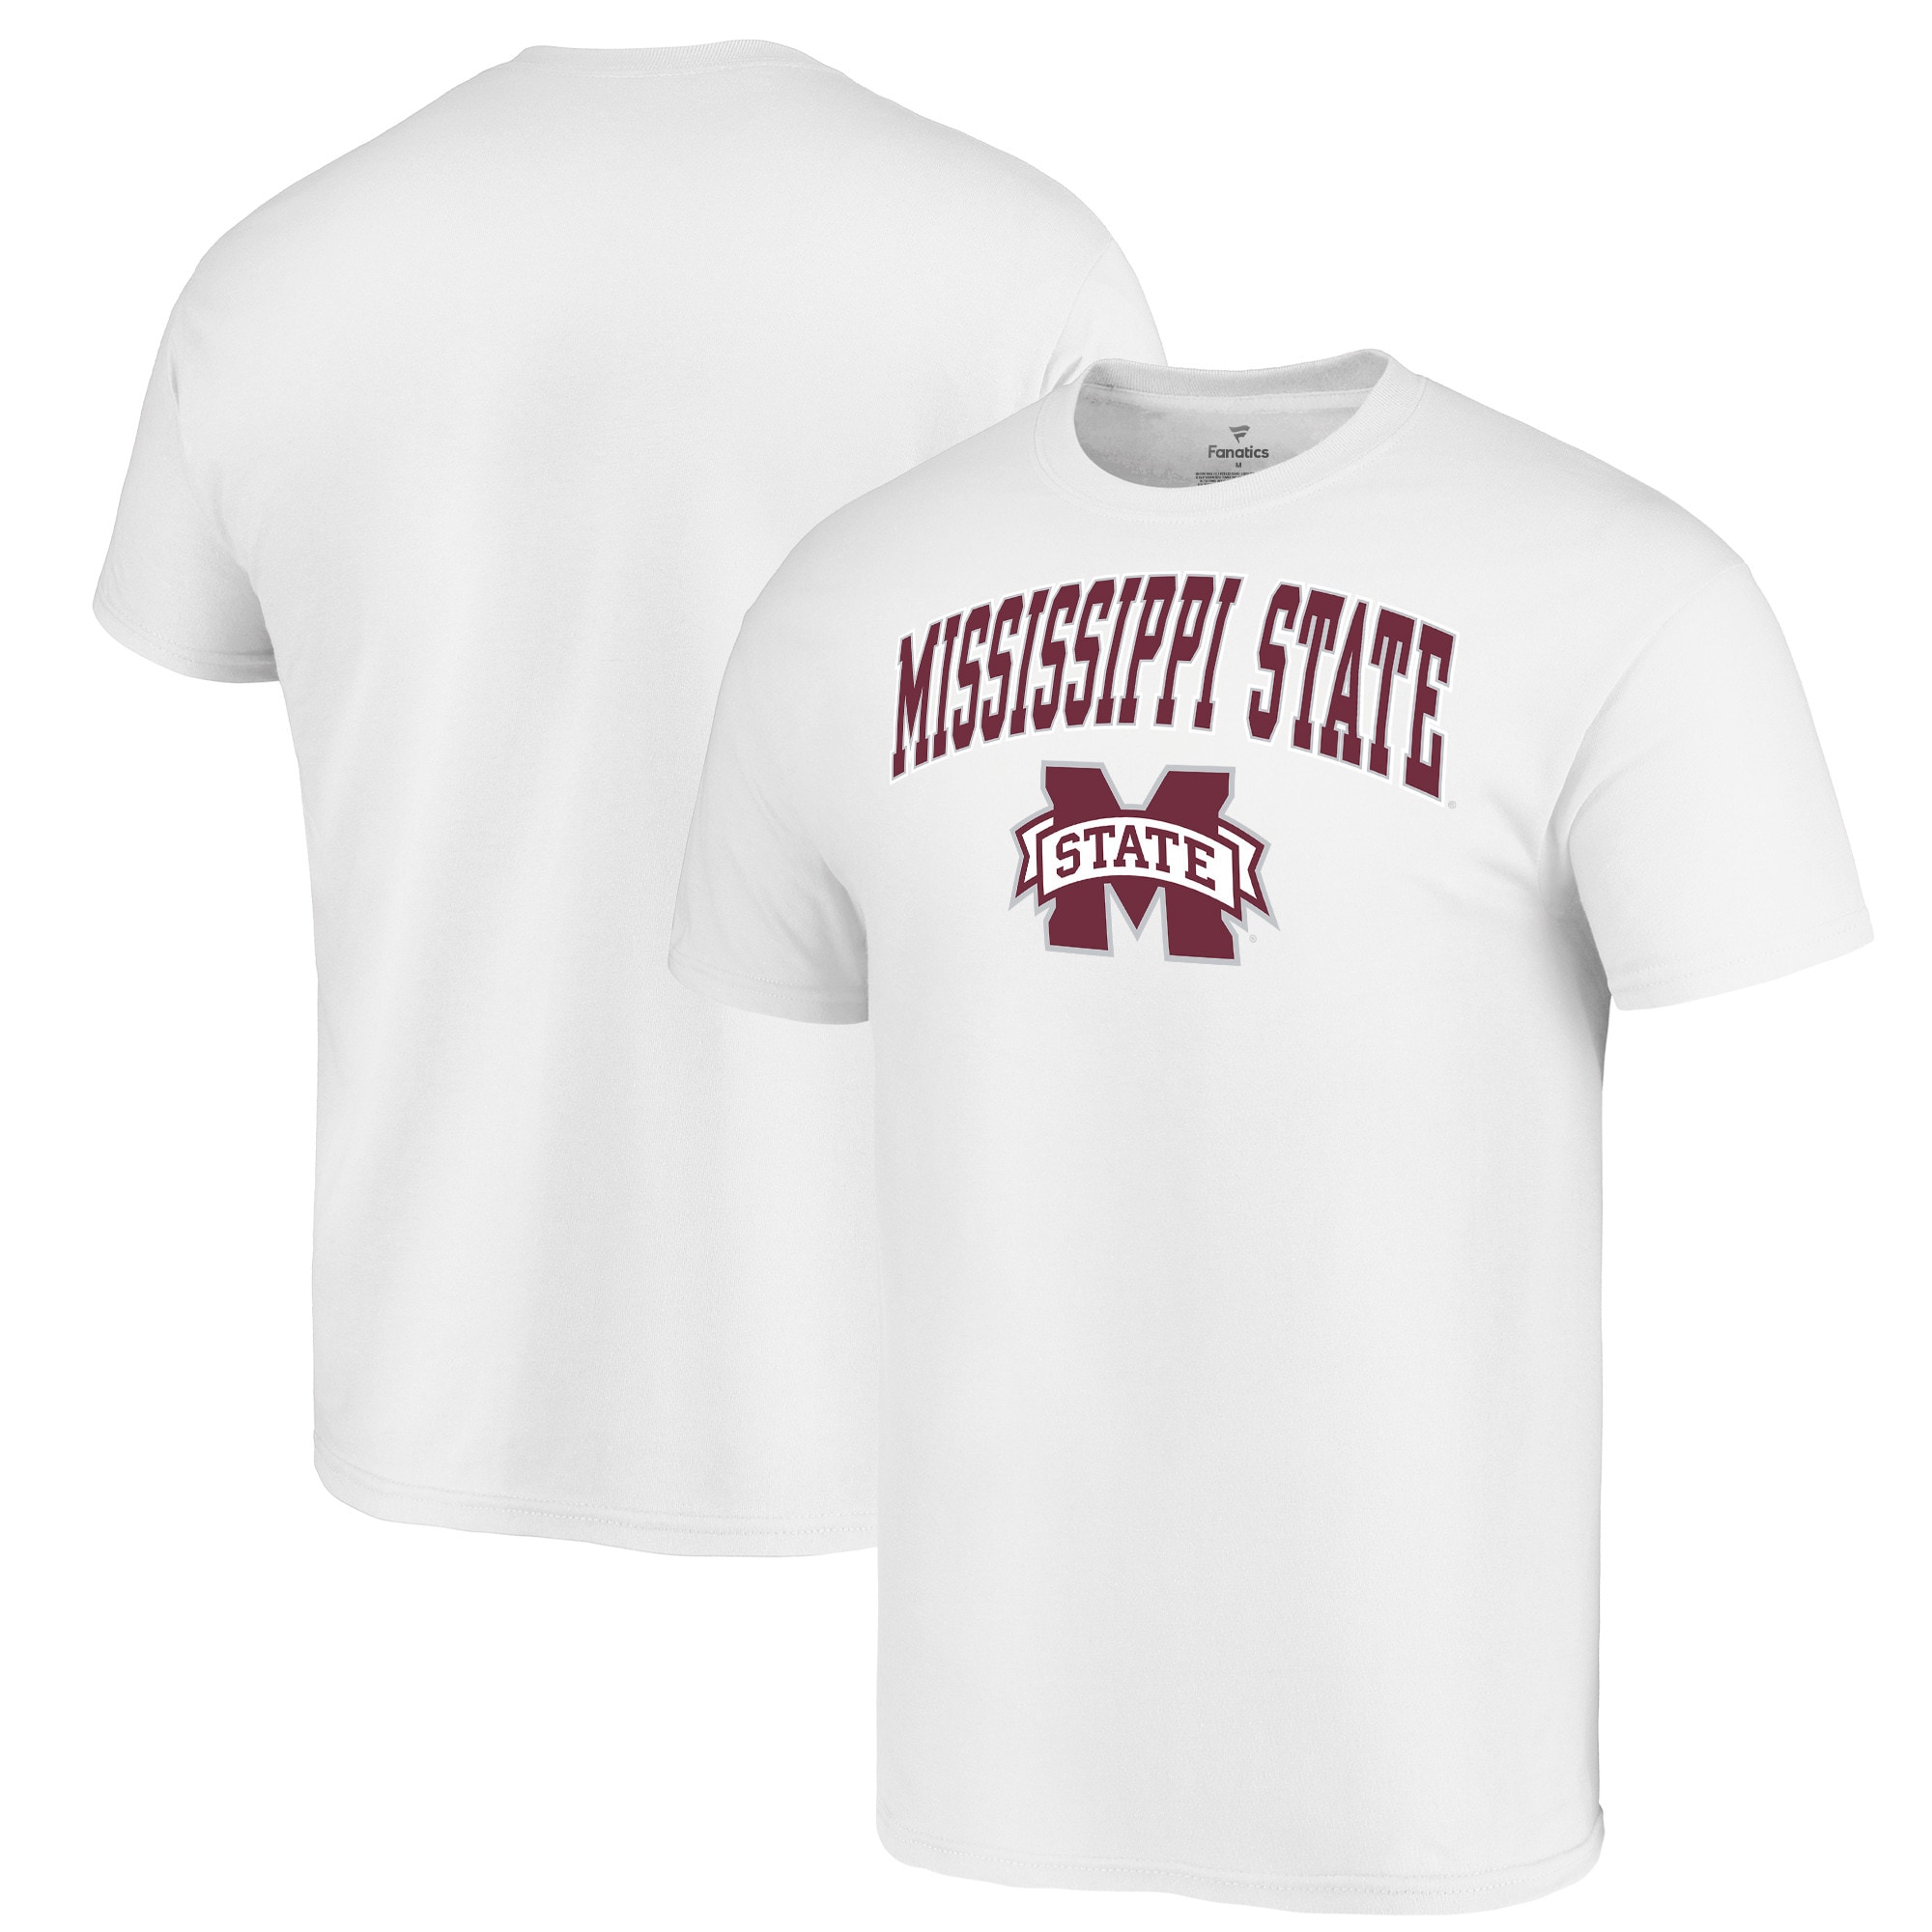 Mississippi State University Doggy Tee-Shirt 